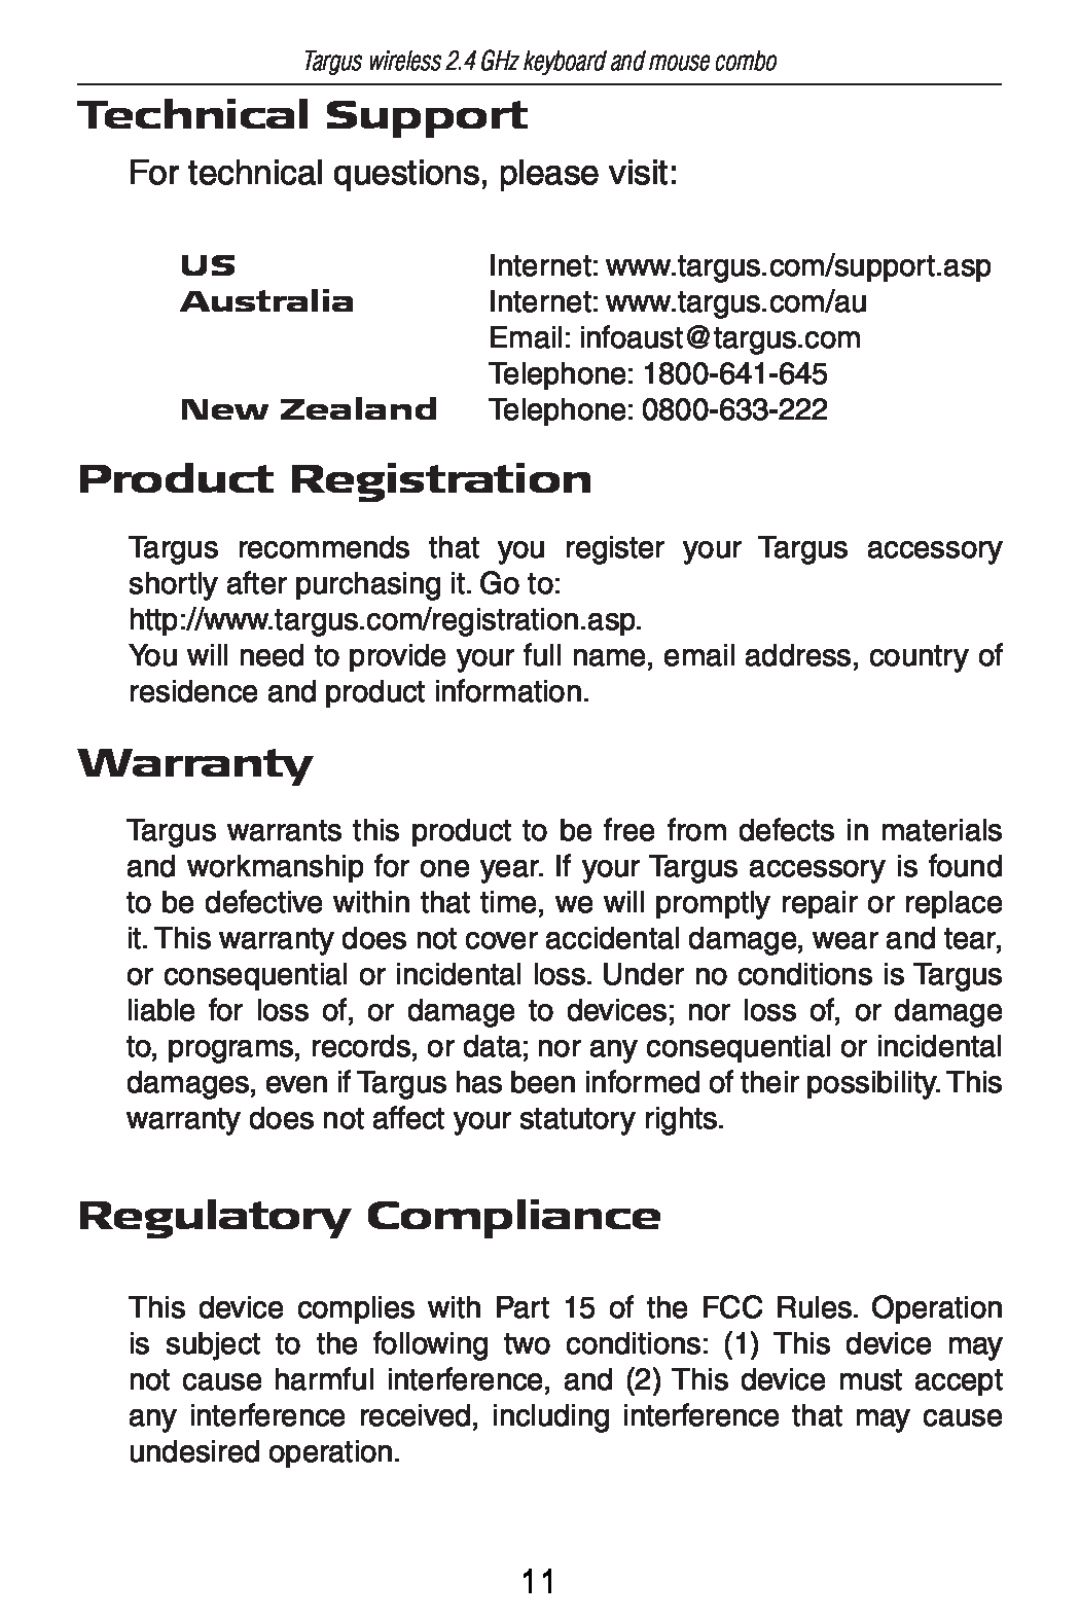 Targus AKM11 Technical Support, Product Registration, Warranty, Regulatory Compliance, Australia, New Zealand 